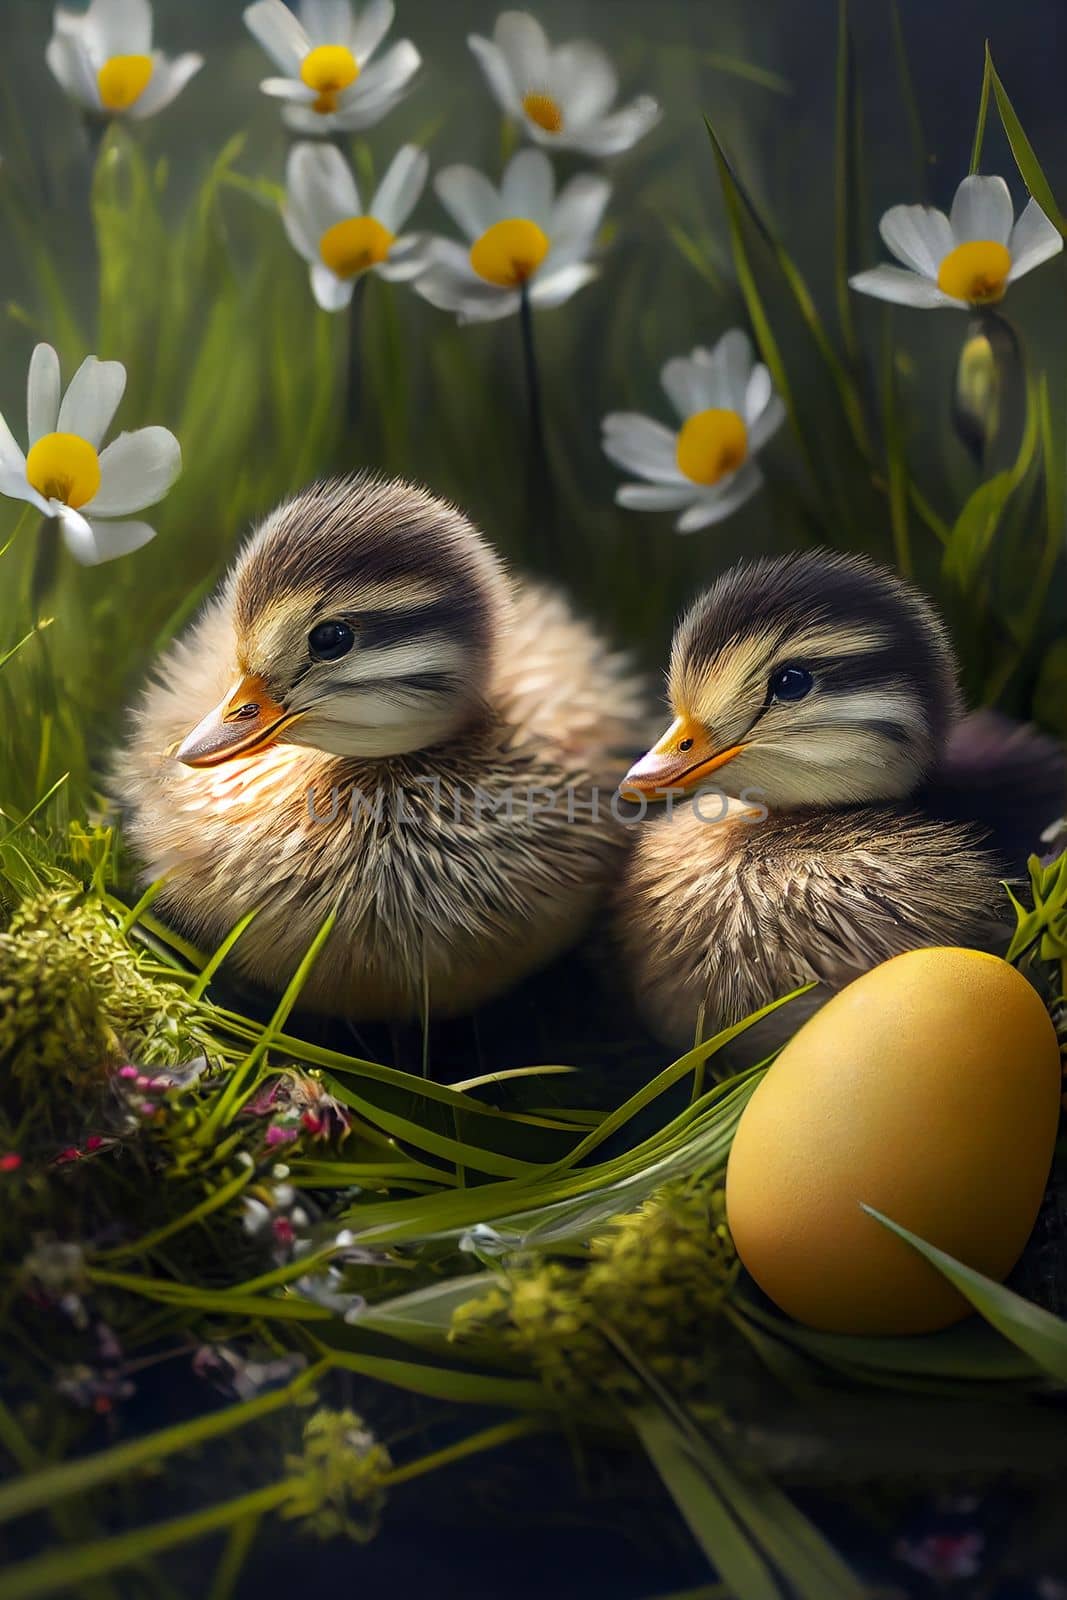 Two cute ducklings in the nest near the eggs by studiodav